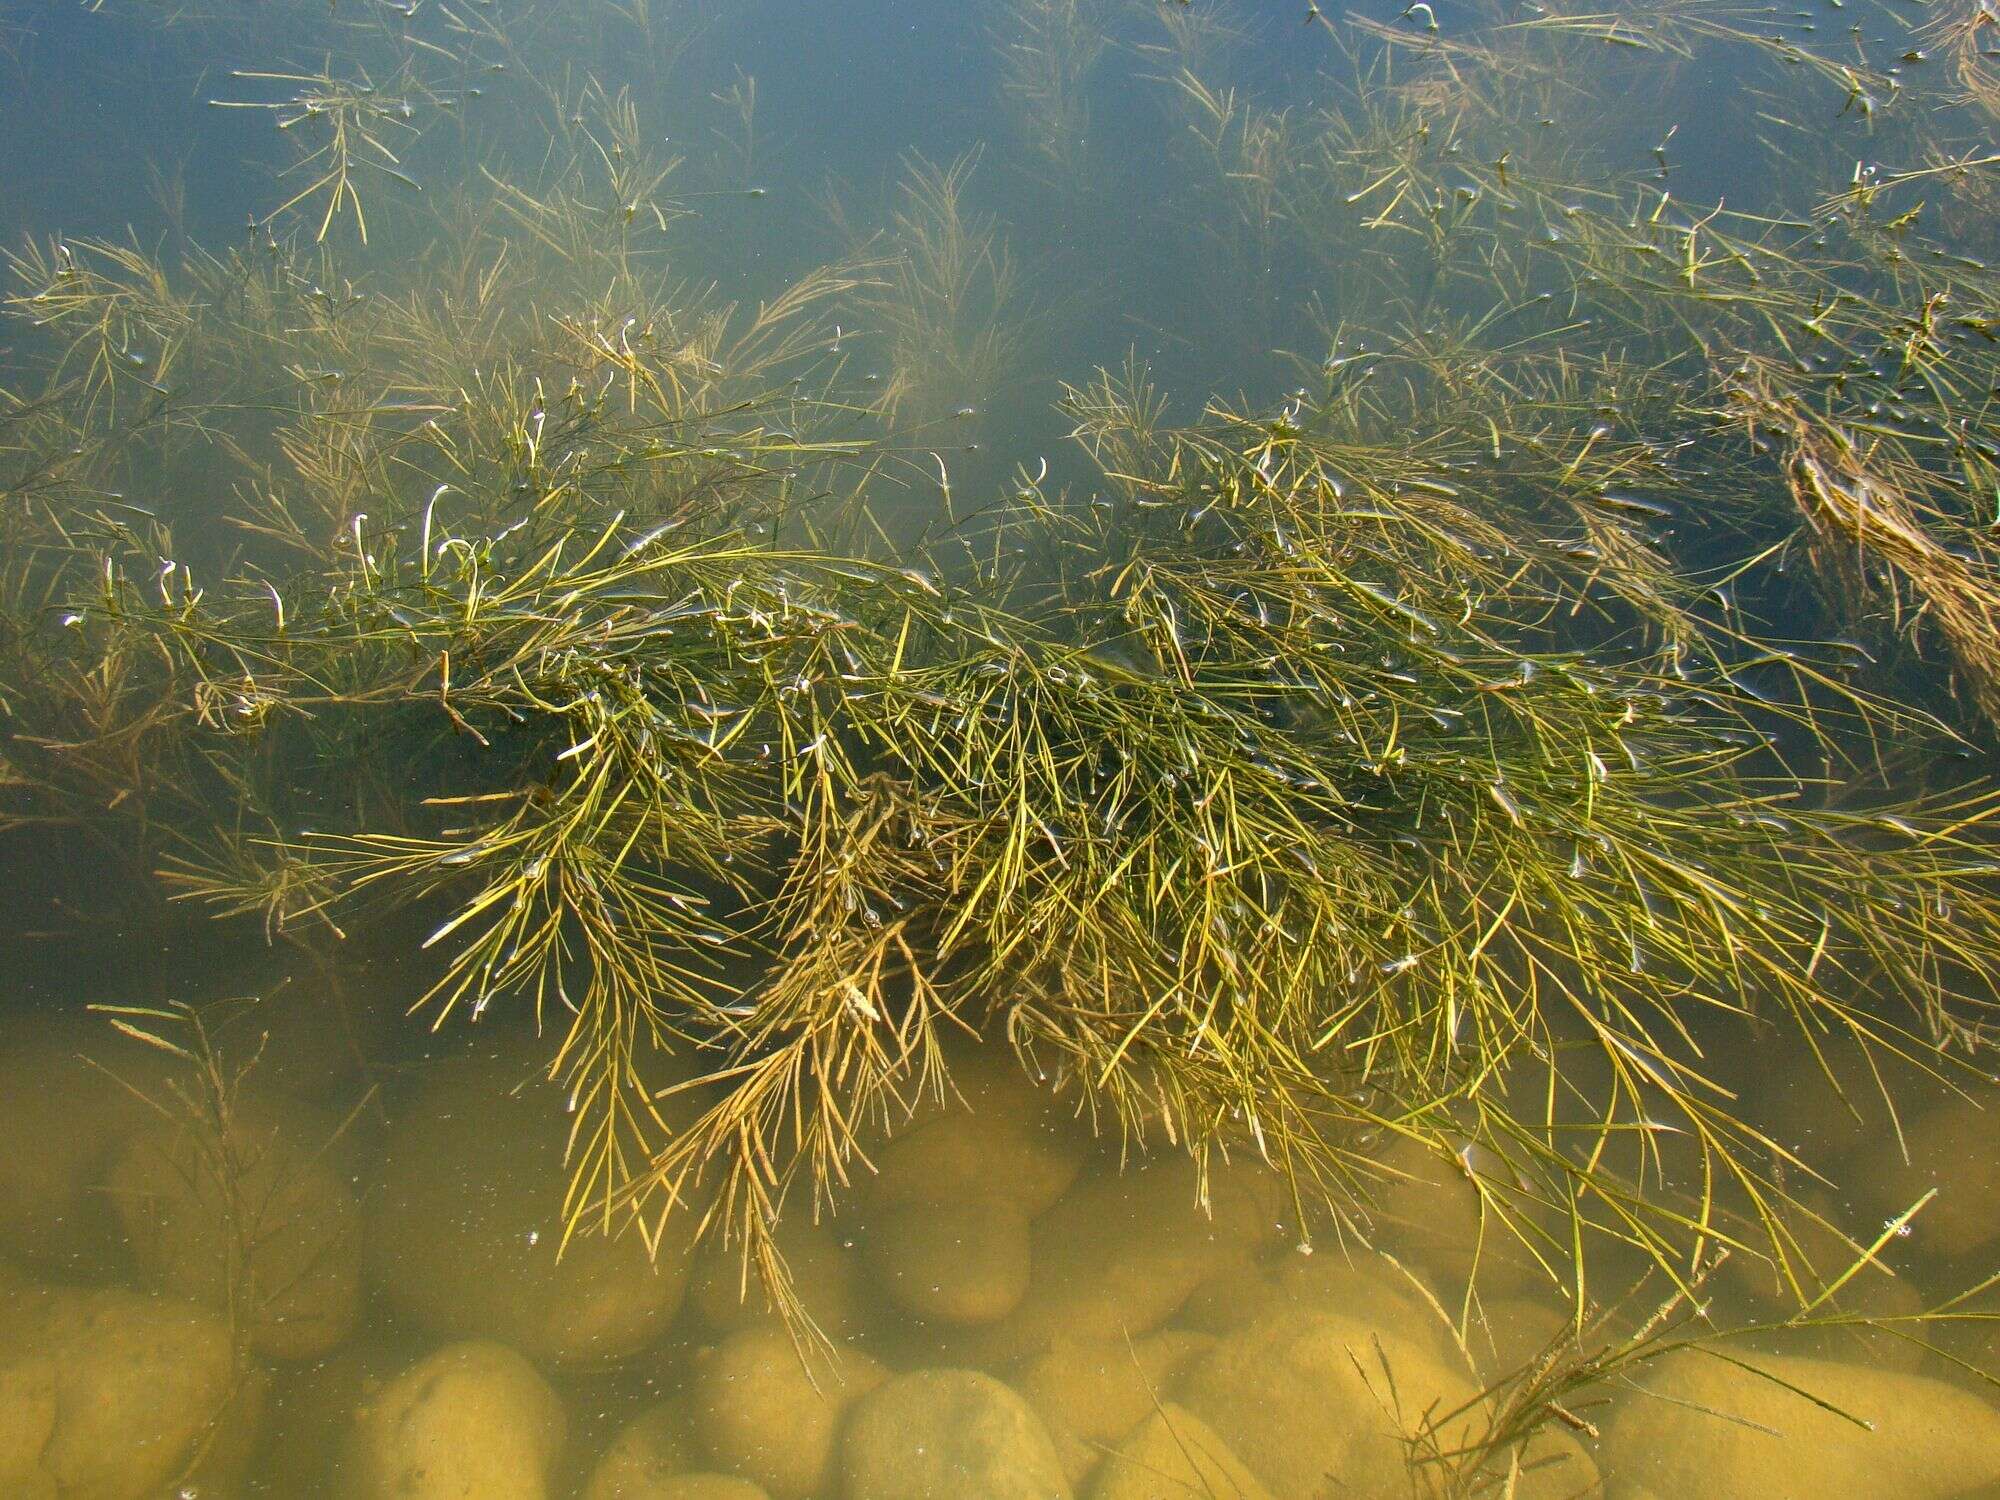 Image of pondweed